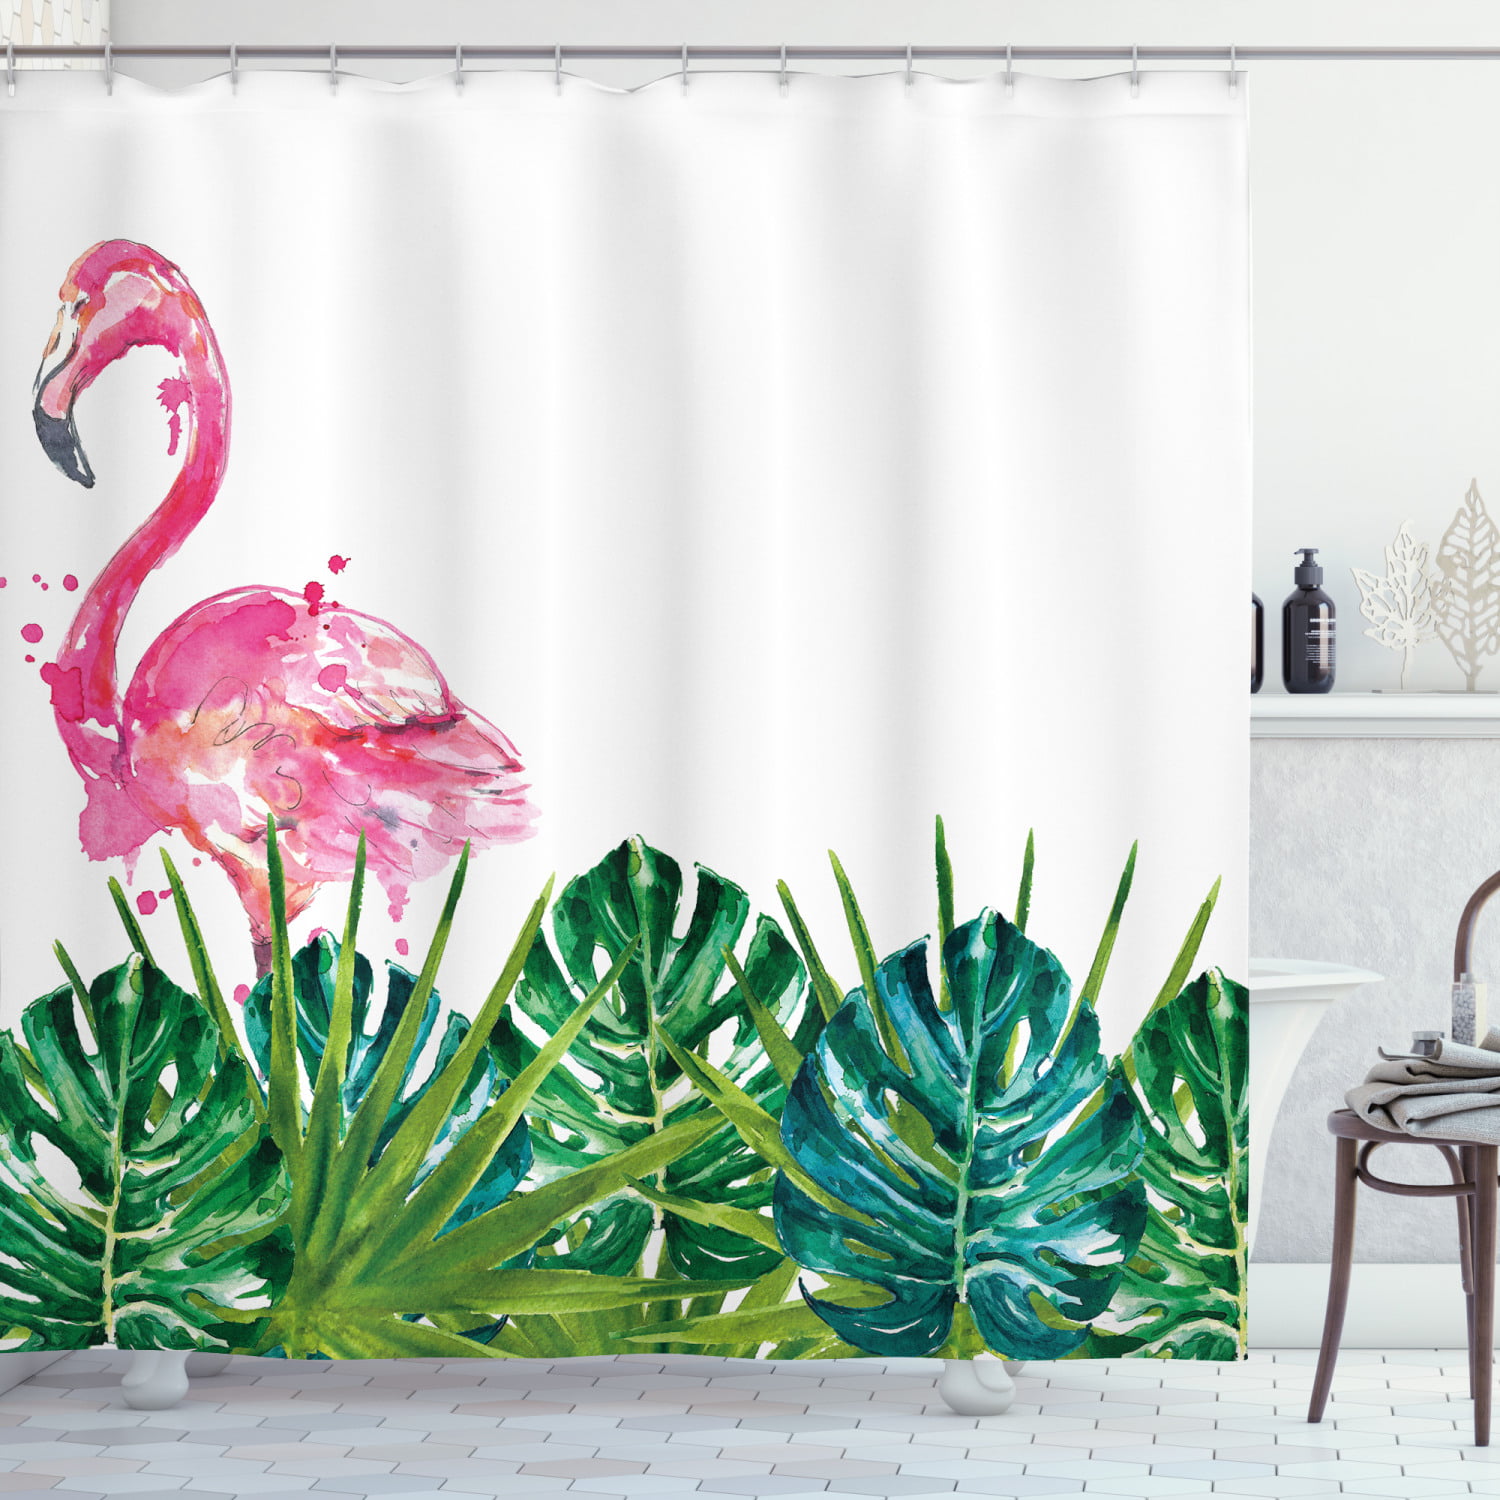 Shower Curtain Bathroom Mat Waterproof Black & White Stripes Watercolor Flamingo 